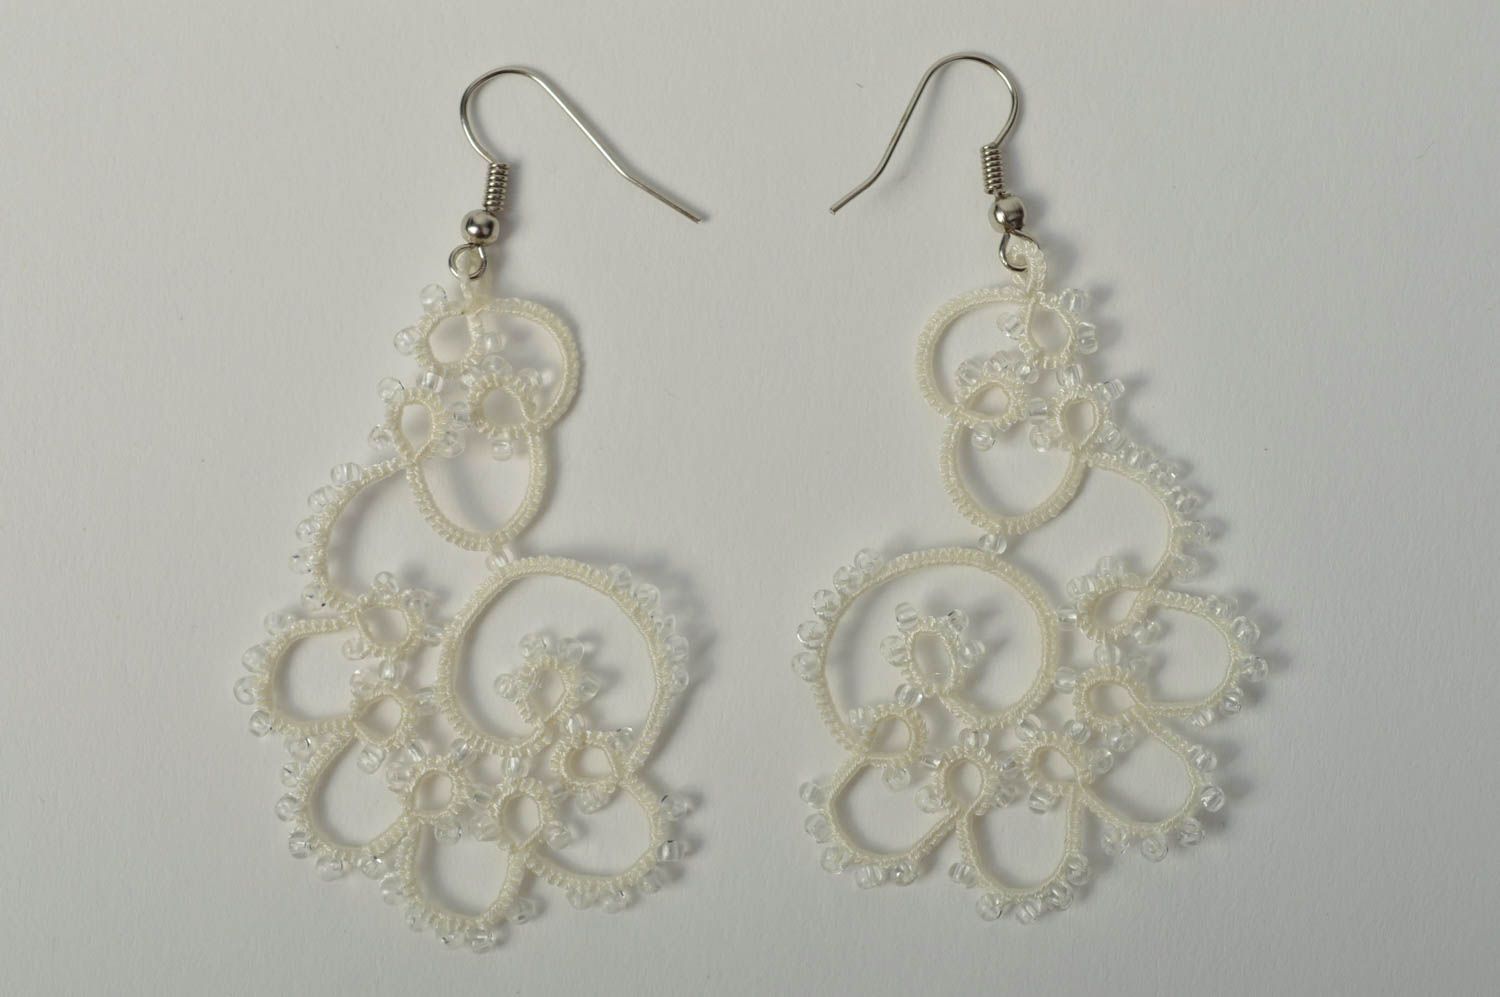 Handmade woven lace earrings artisan jewelry designs beautiful jewellery photo 3